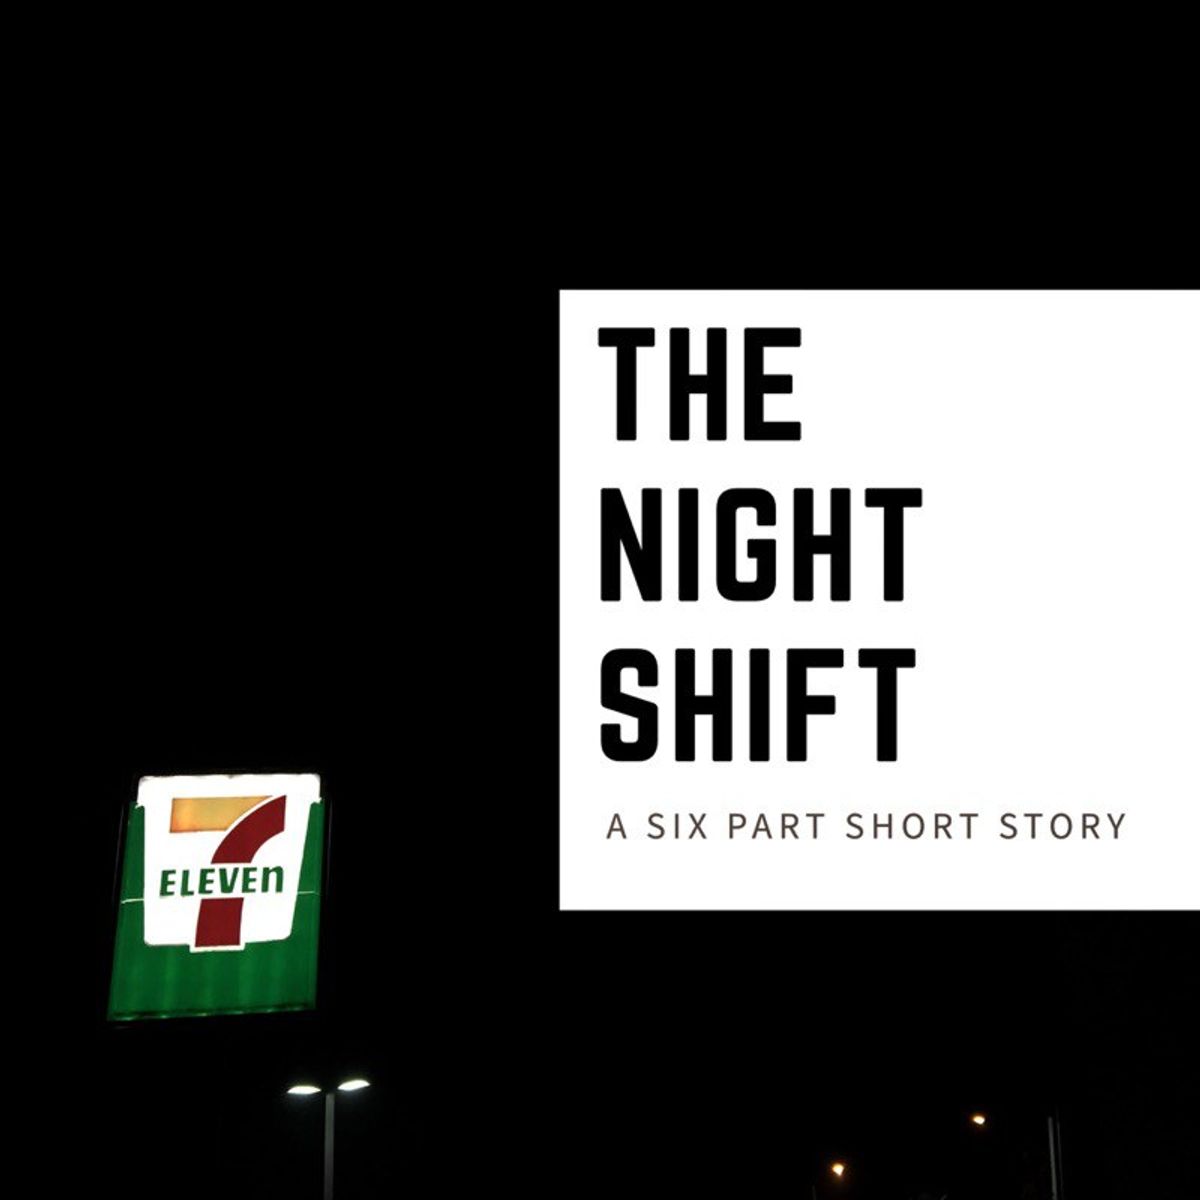 The Night Shift -- 11 PM